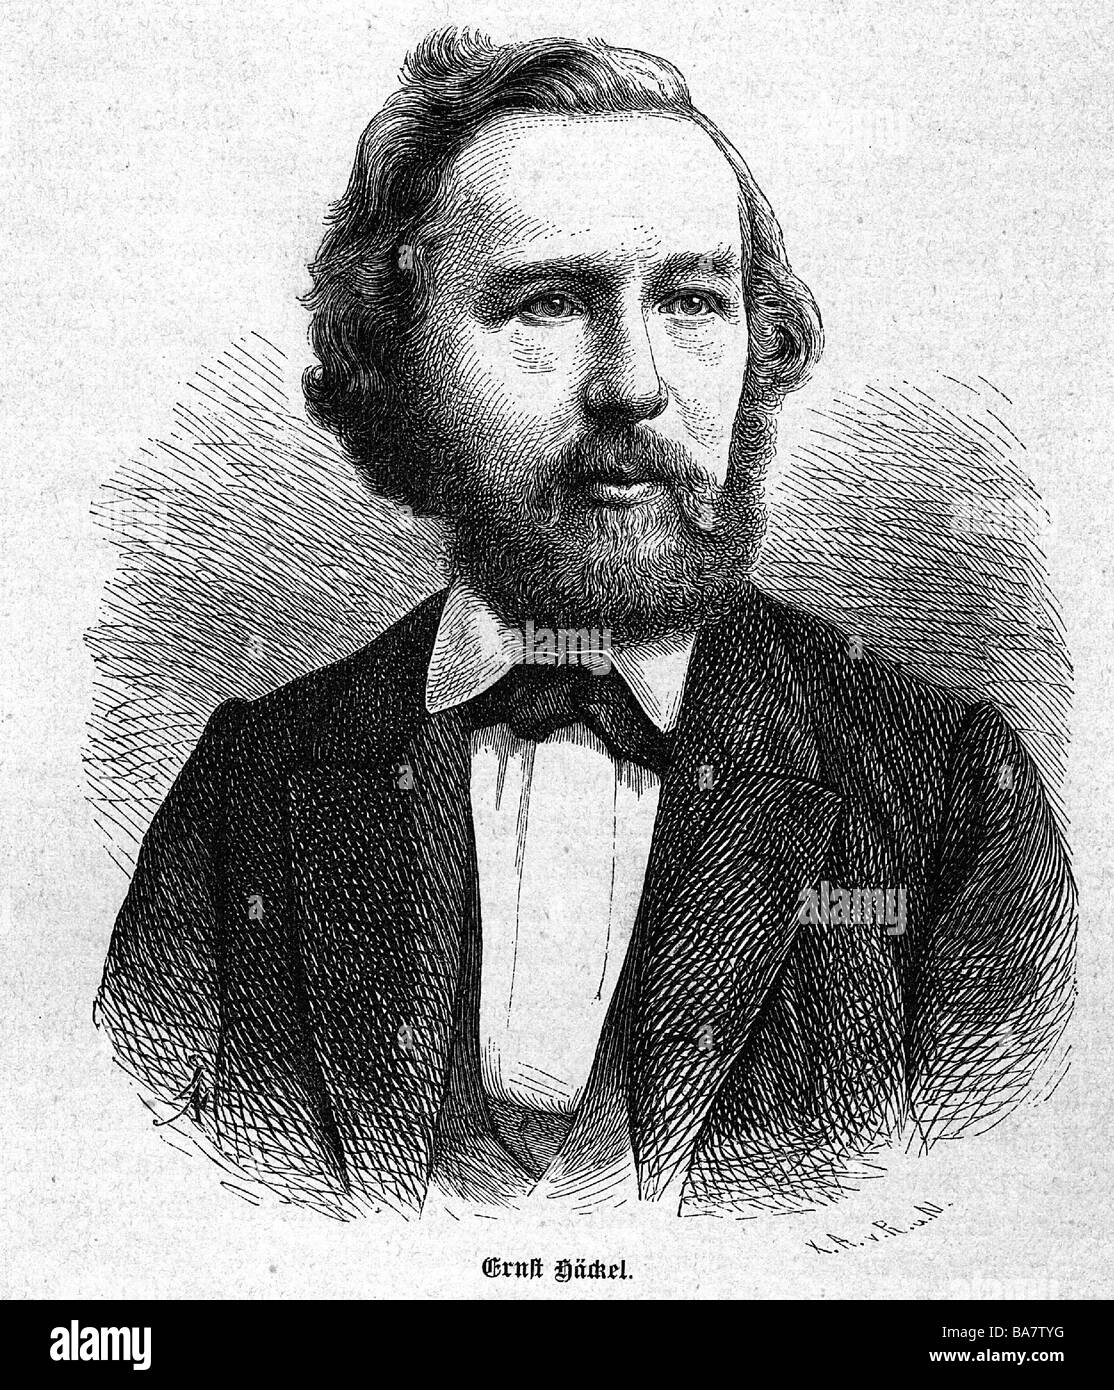 Haeckel, Ernst, 16.2.1834 - 9.8.1919, German scientist, portrait, wood engraving, 19th century, Stock Photo